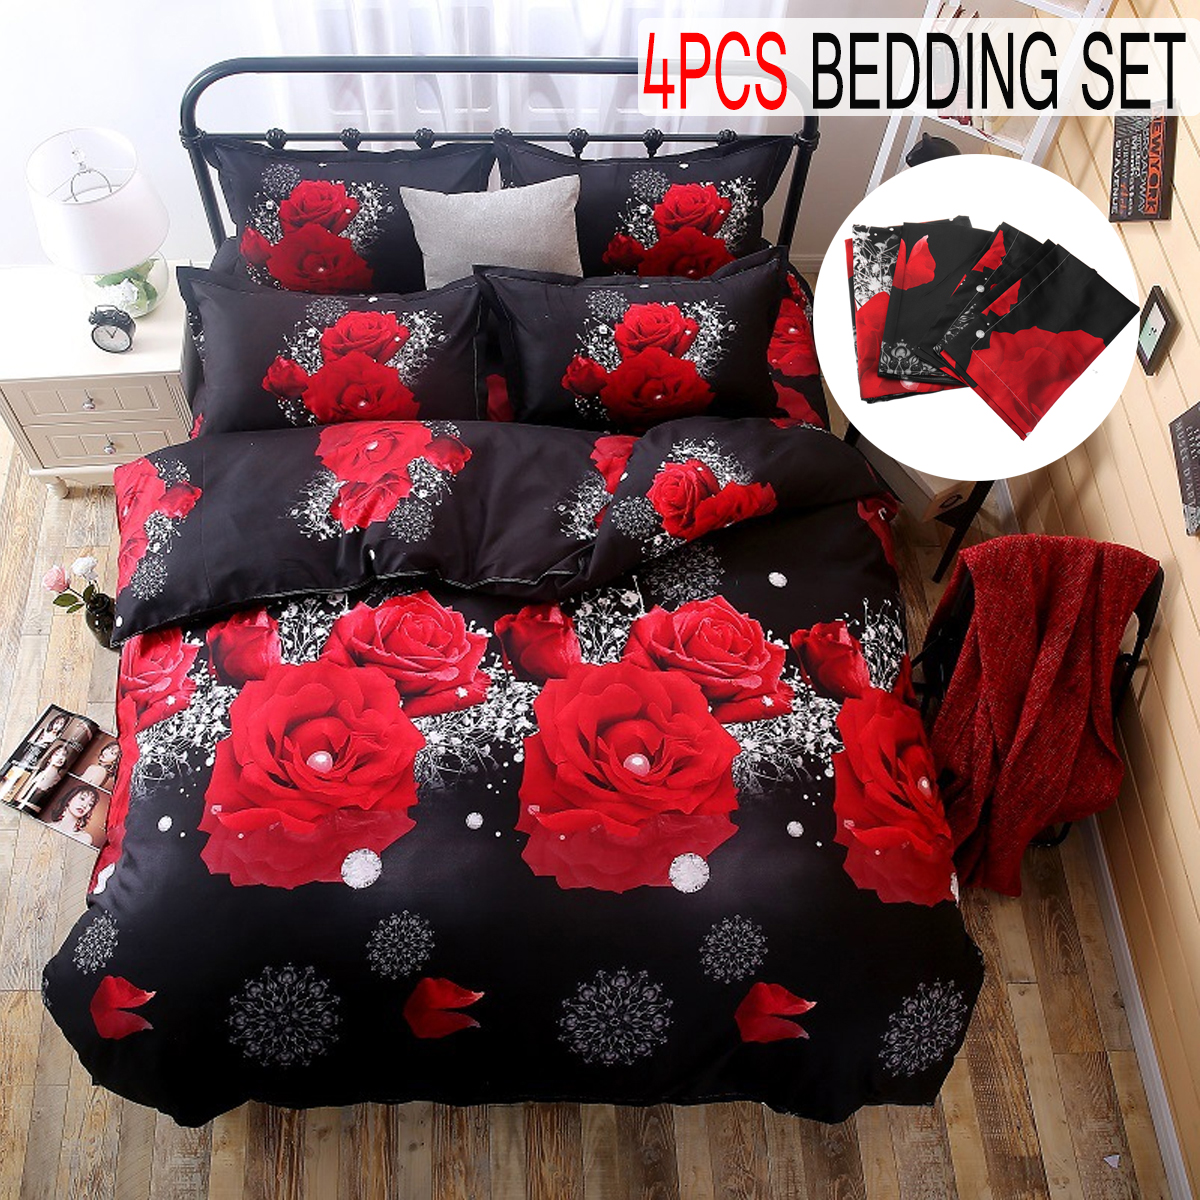 4pcs 3D Bedding Set Duvet Cover Bed Sheet Pillowcase Red Rose Bedclothes Full 